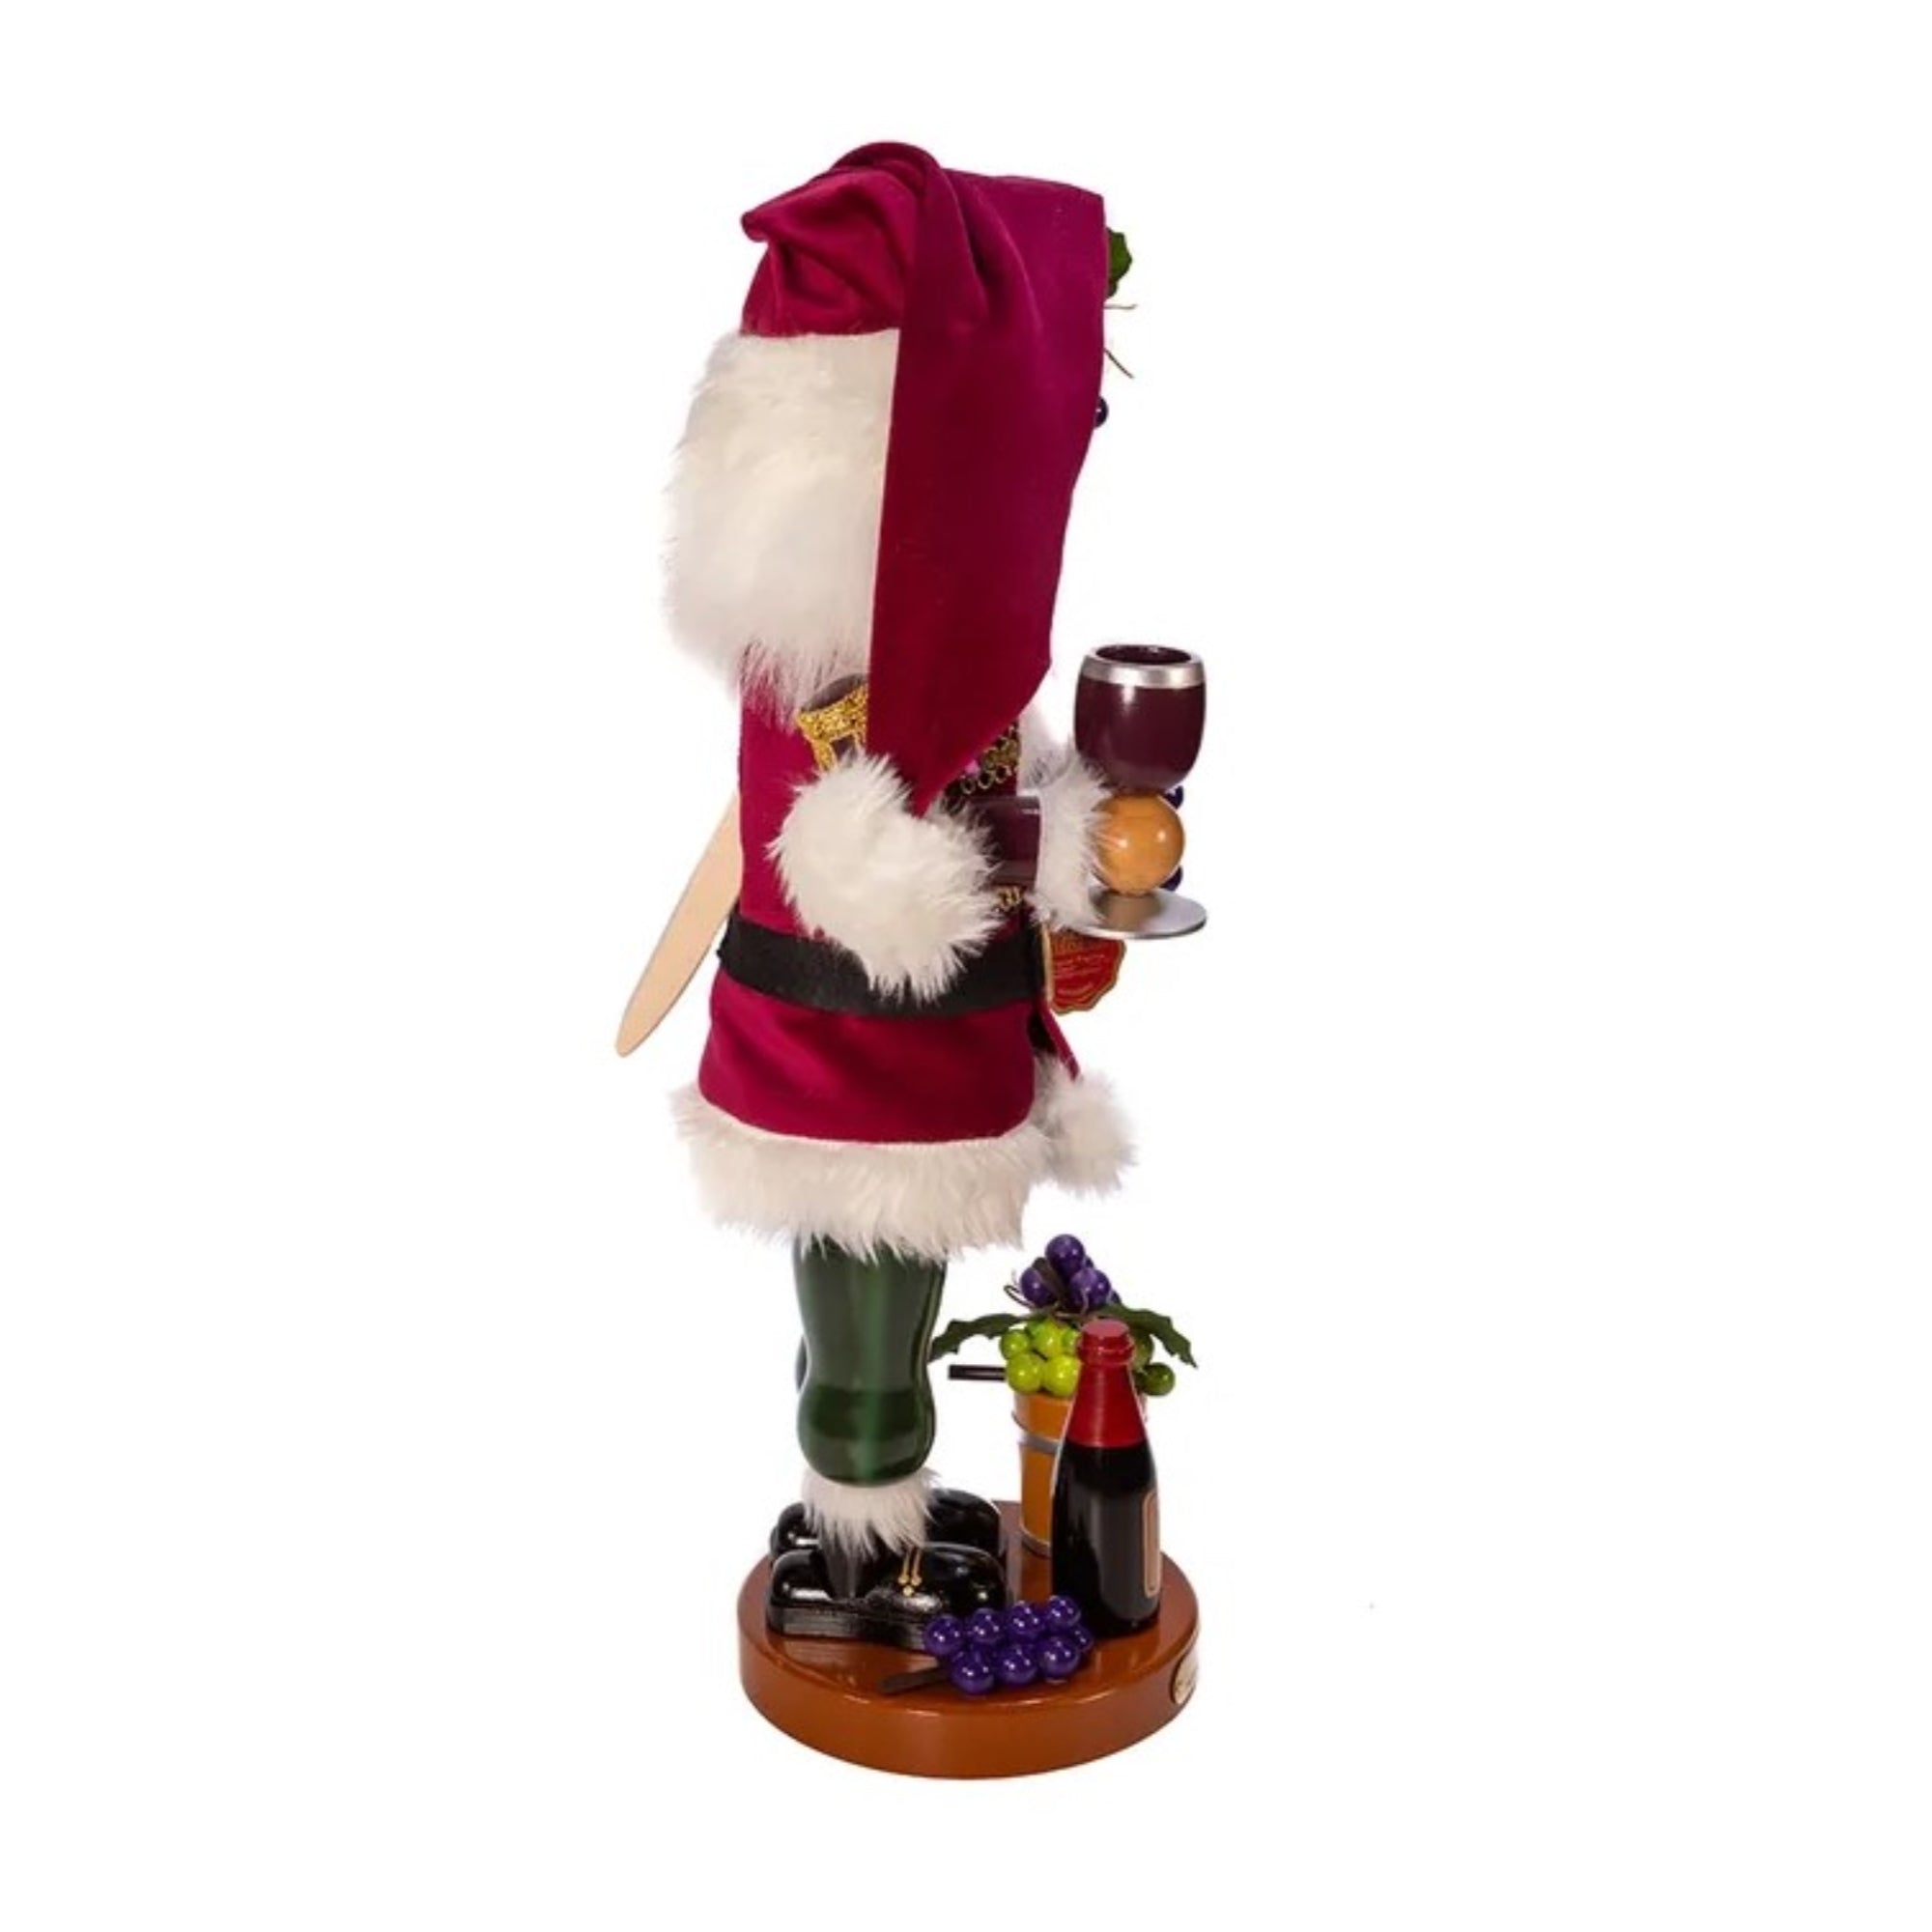 Kurt Adler Hollywood Nutcrackers, The North American Santa Series, 3rd in the Series, Winemaker Nutcracker, 18.25”